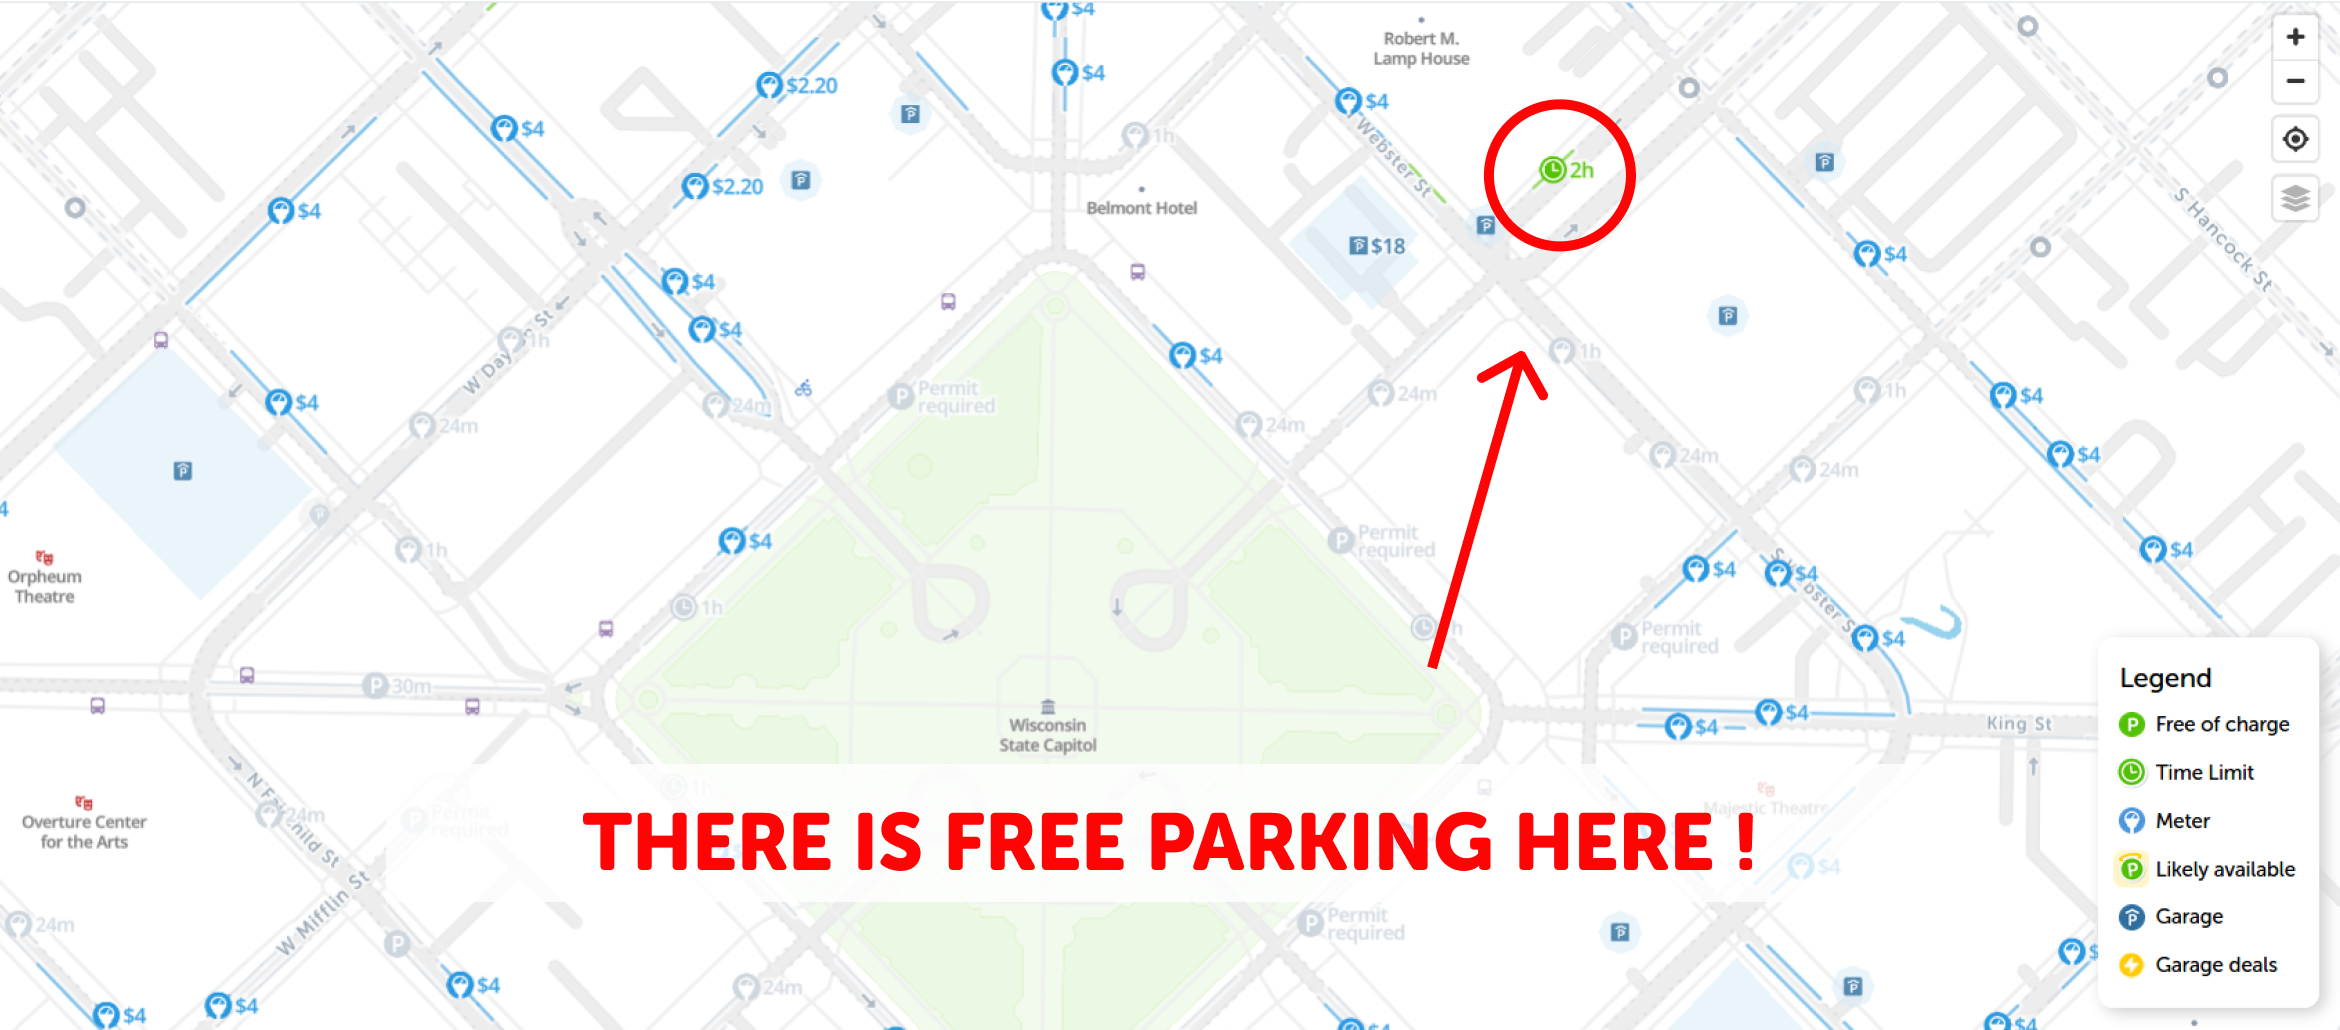 map of free parking in Madison - SpotAngels